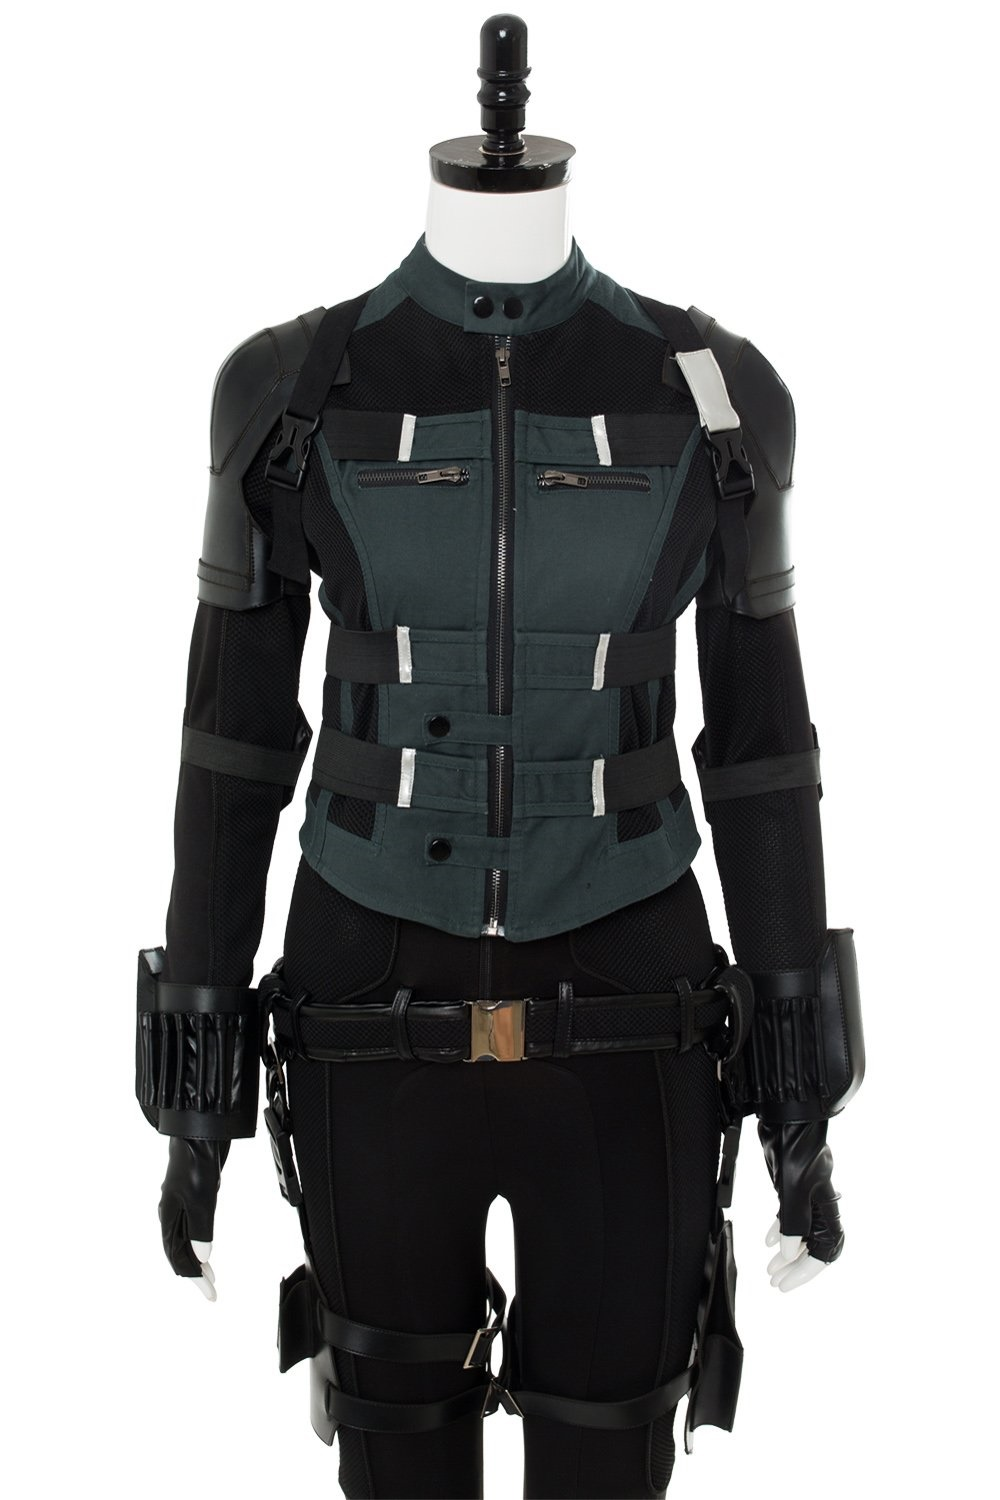 Avengers 3 Infinity War Black Widow Natasha Romanoff Outfit Cosplay Kostüm ganzes Set